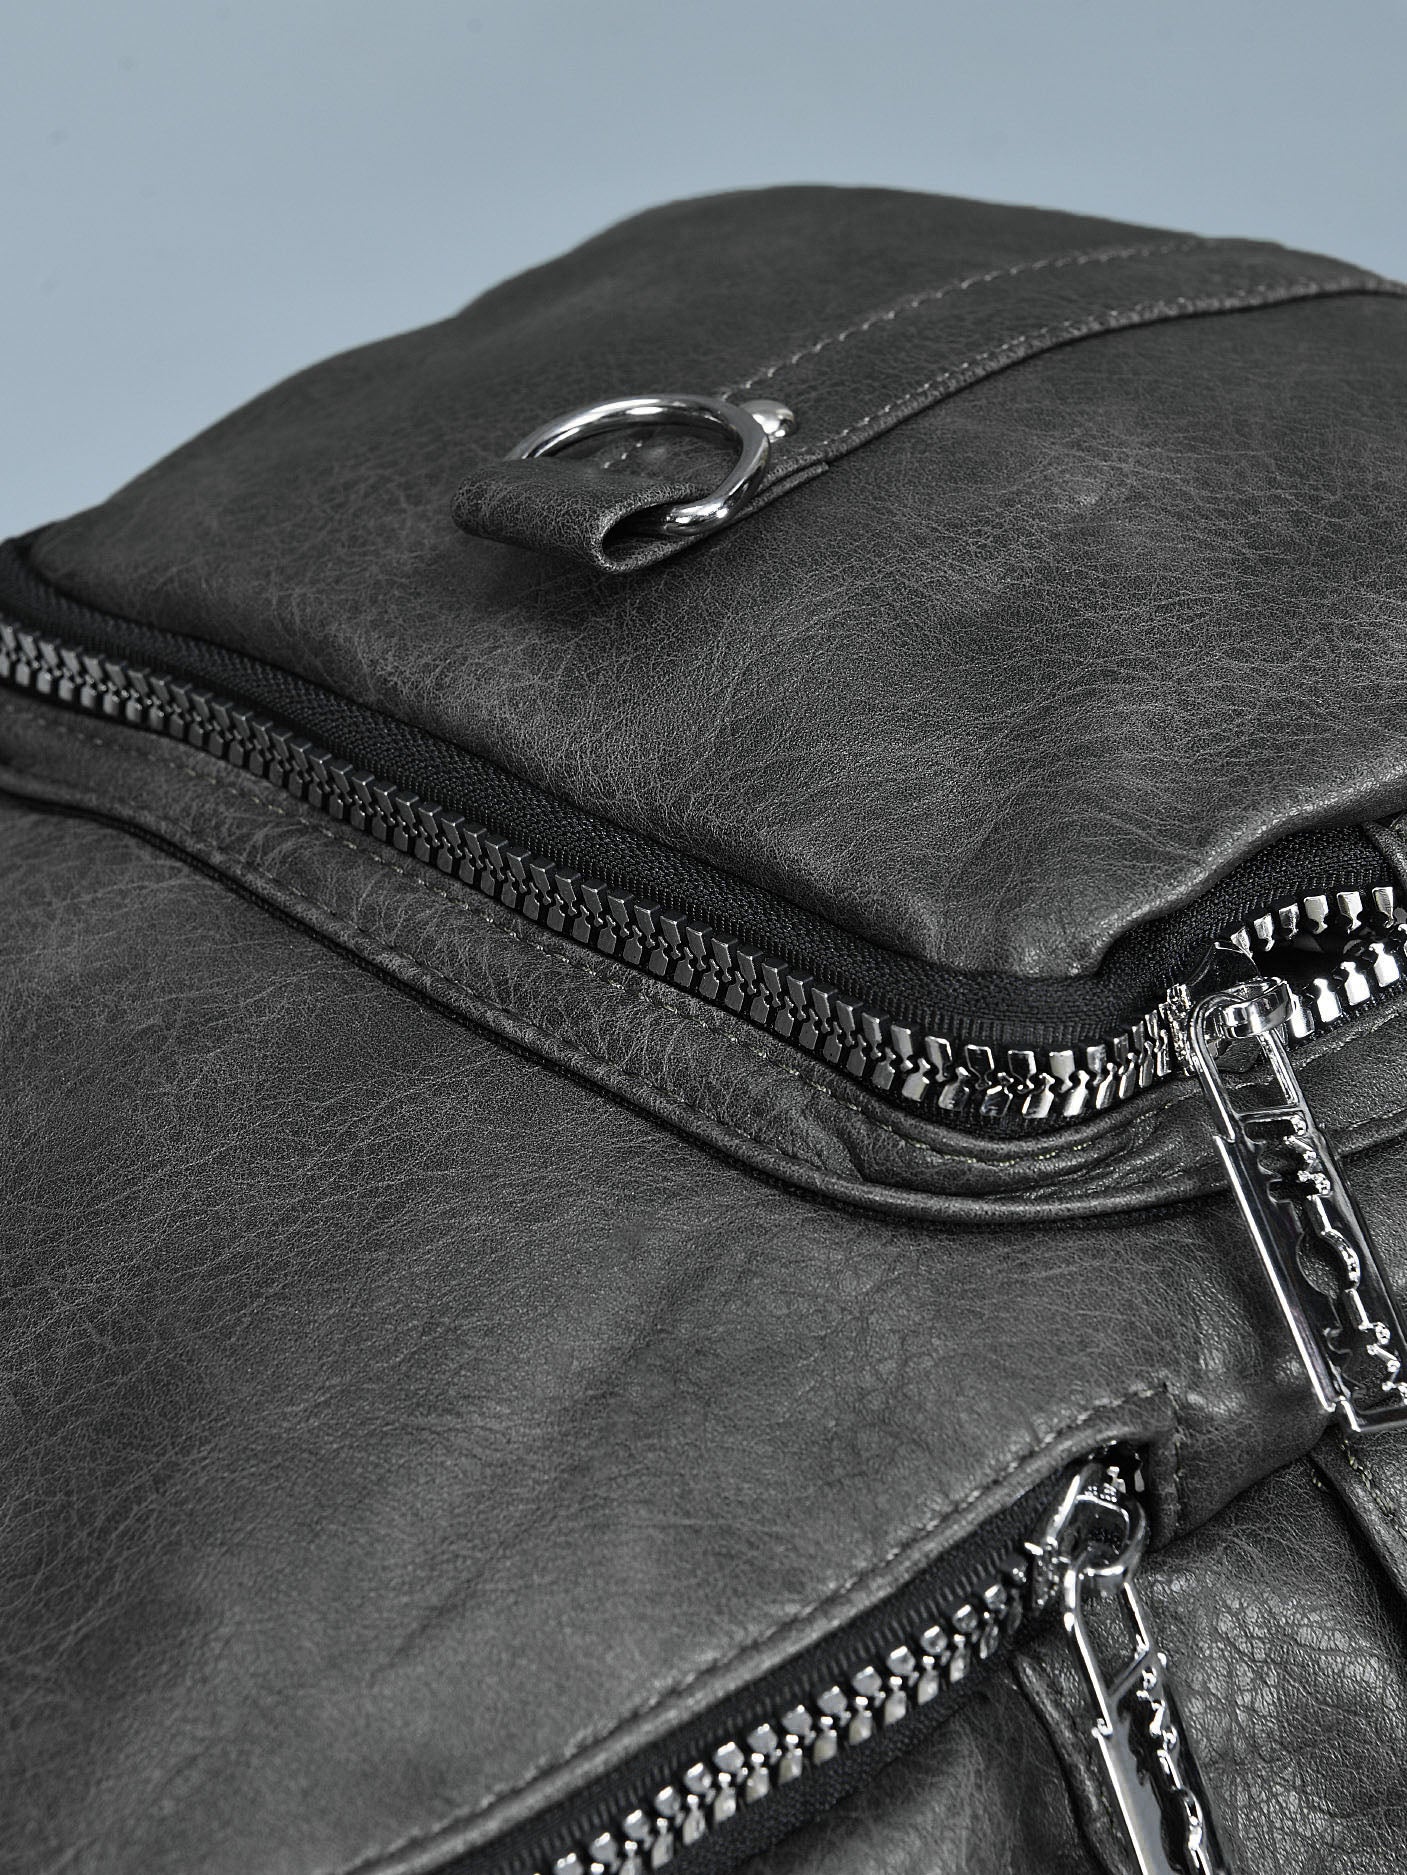 Metallic Detail Backpack